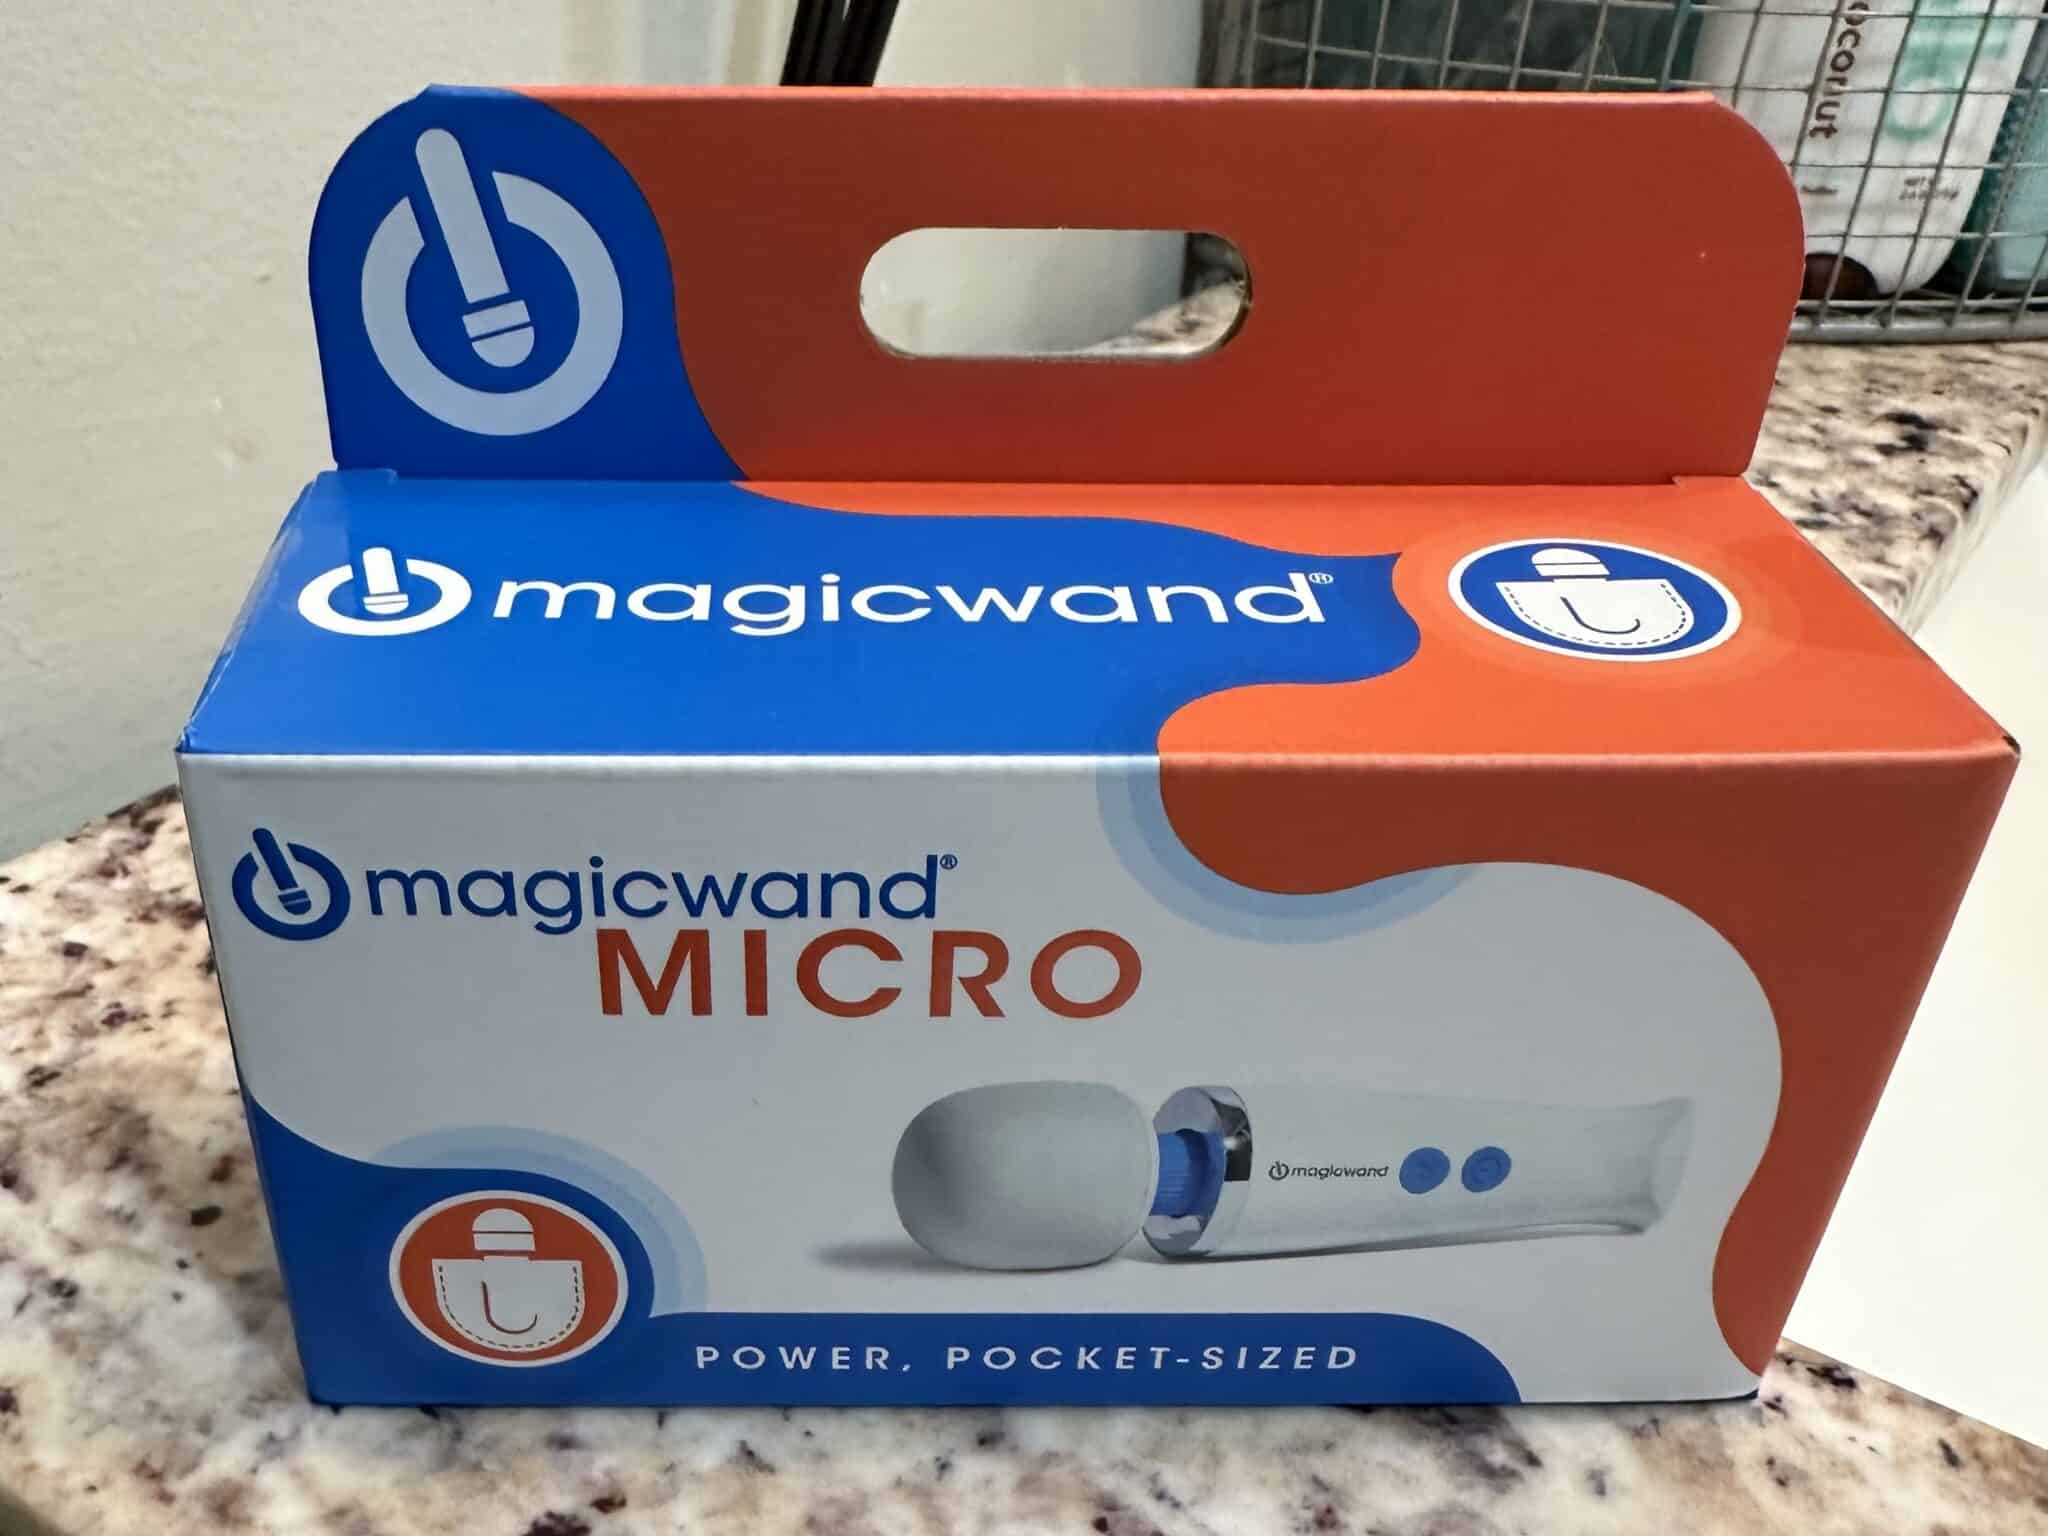 Magic Wand Micro Packaging